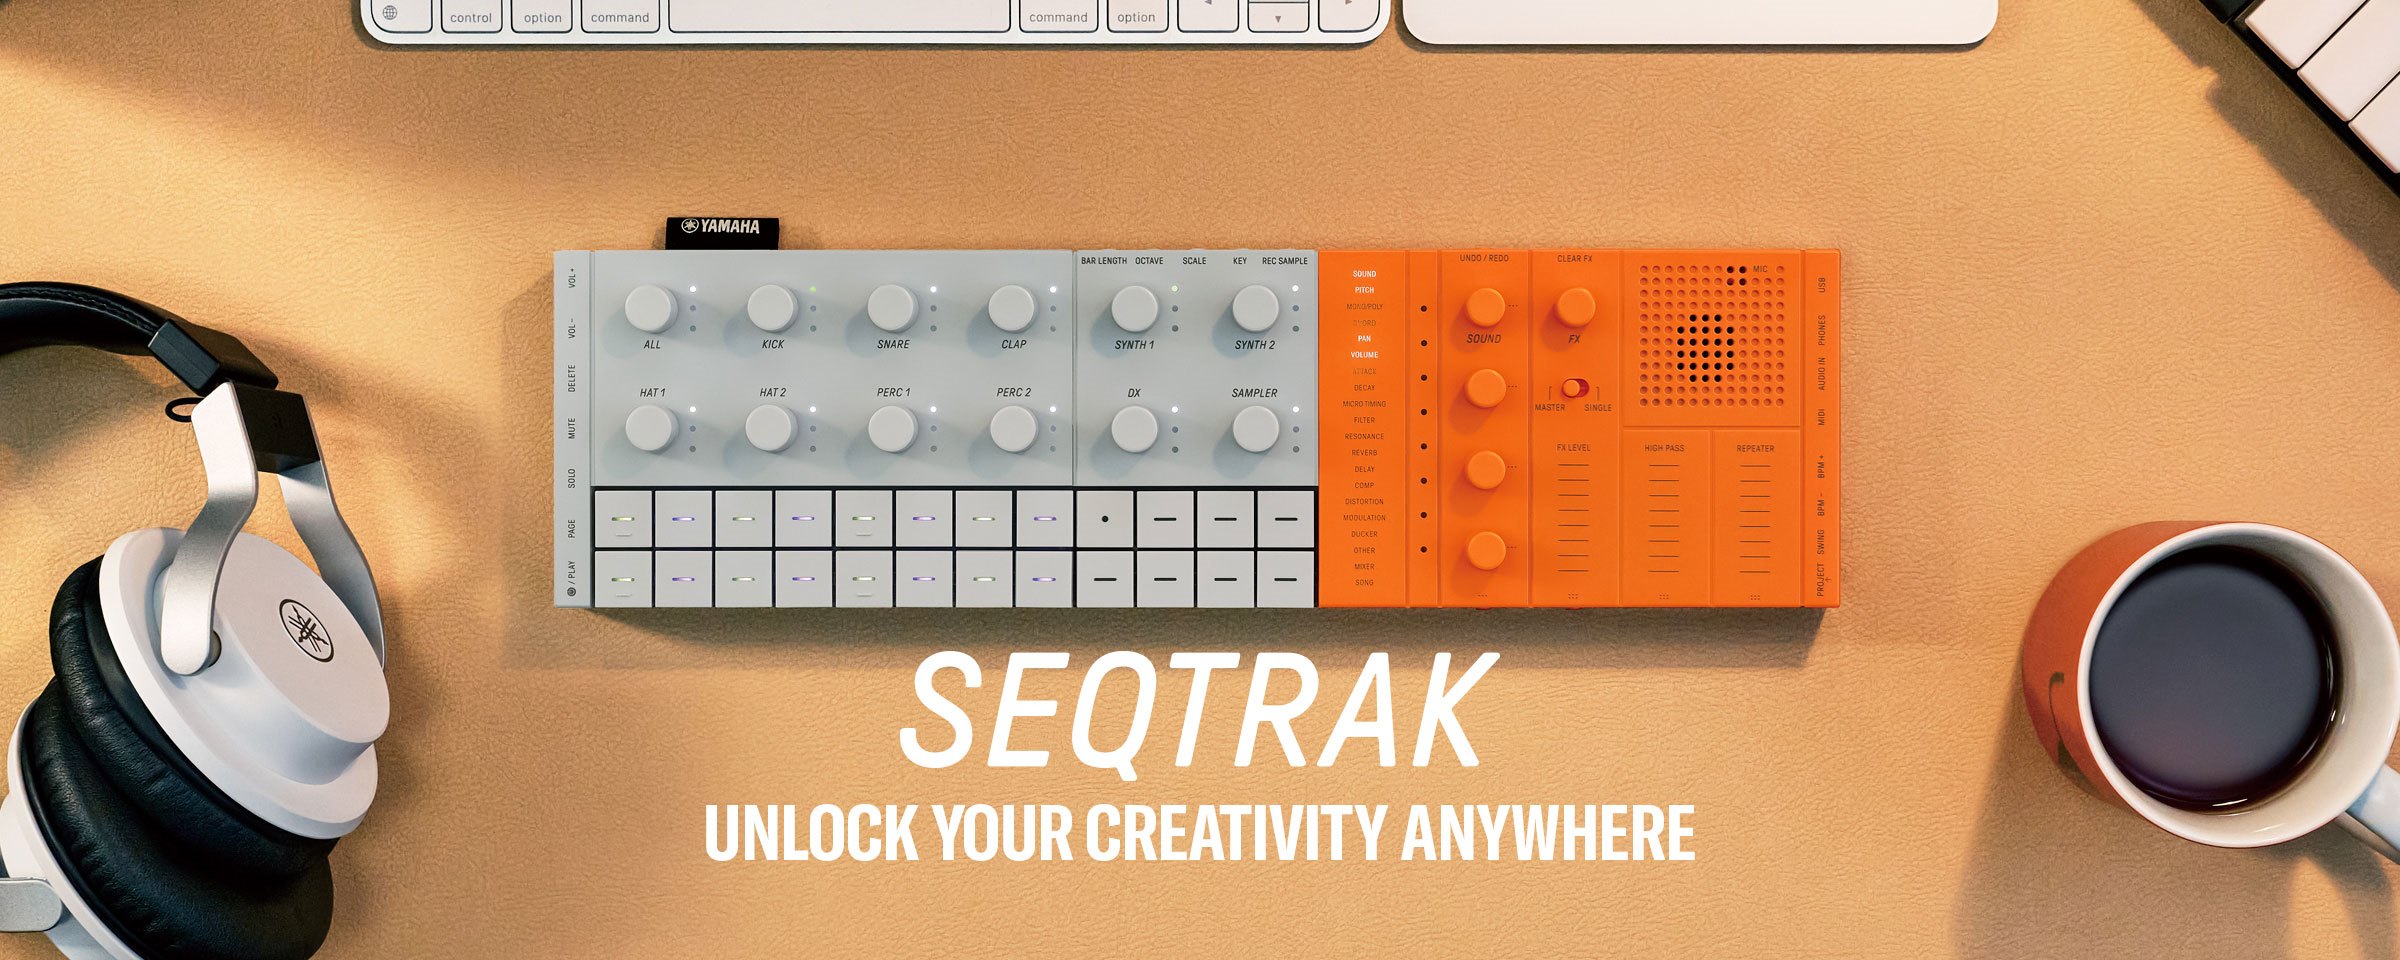 SEQTRAK - Specs - Music Production Studios - Synthesizers & Music 